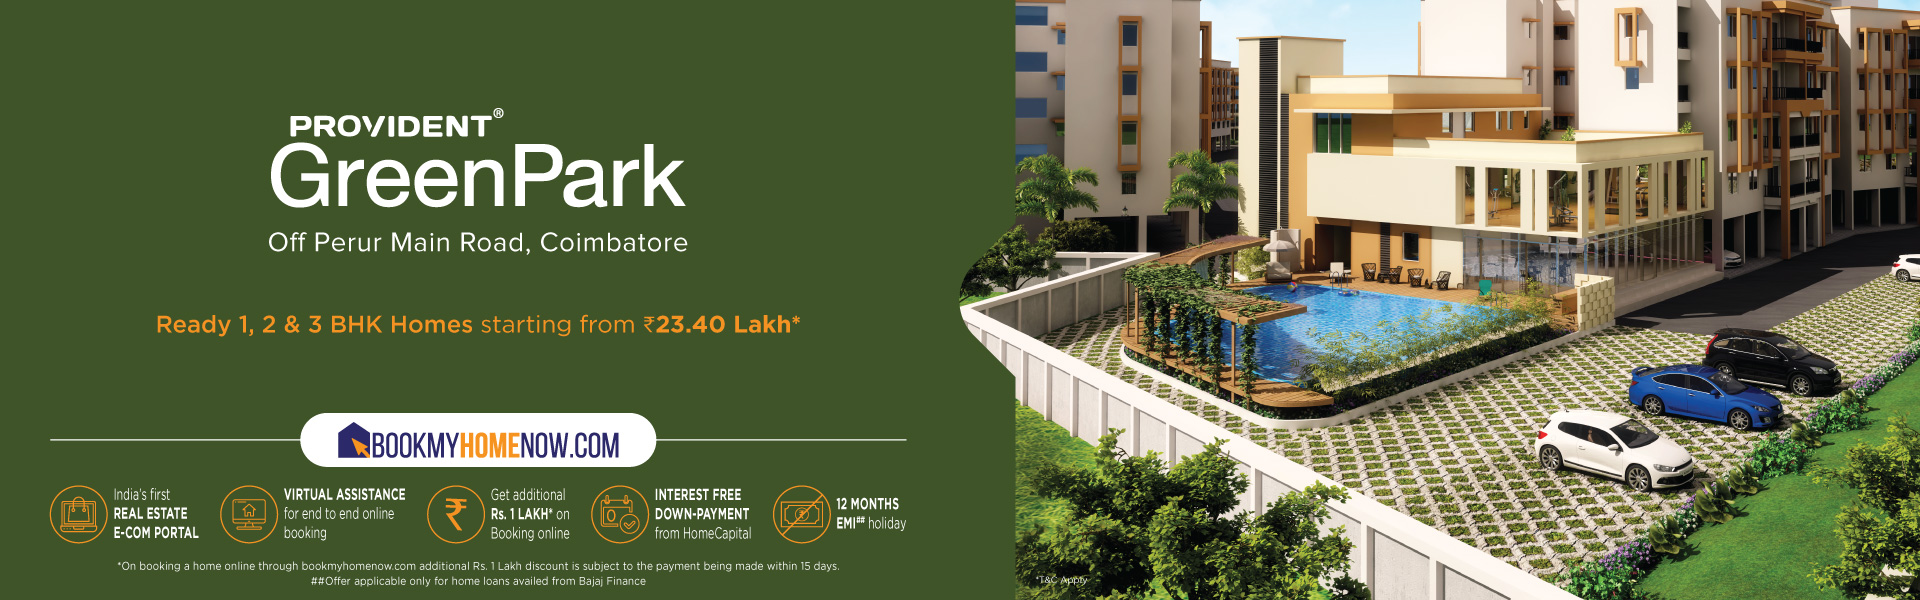 Provident Housing | Provident Green Park, Coimbatore